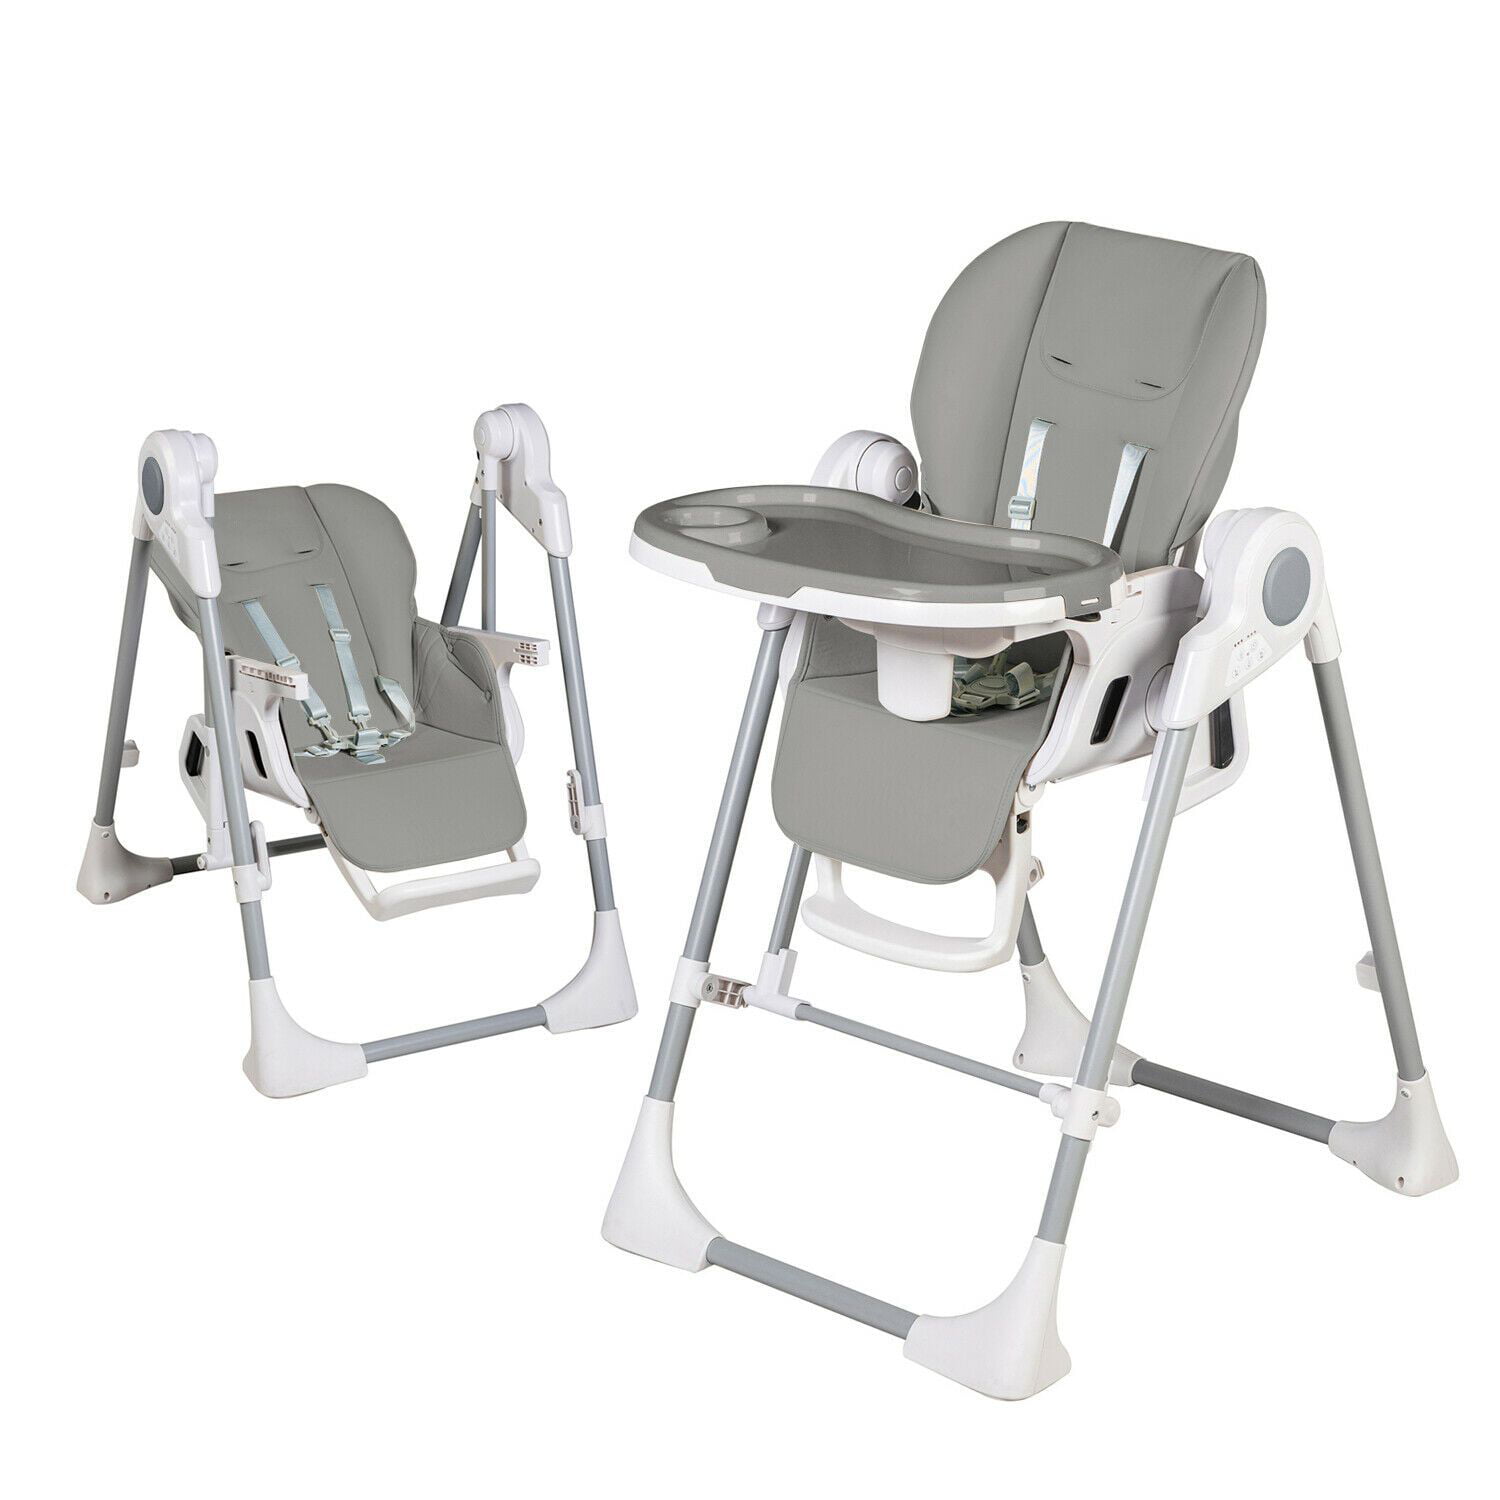 Convertible Baby Swing Infant High Chair Feeding Rocker Toddler Nap Sleep Seat Walmart Com Walmart Com